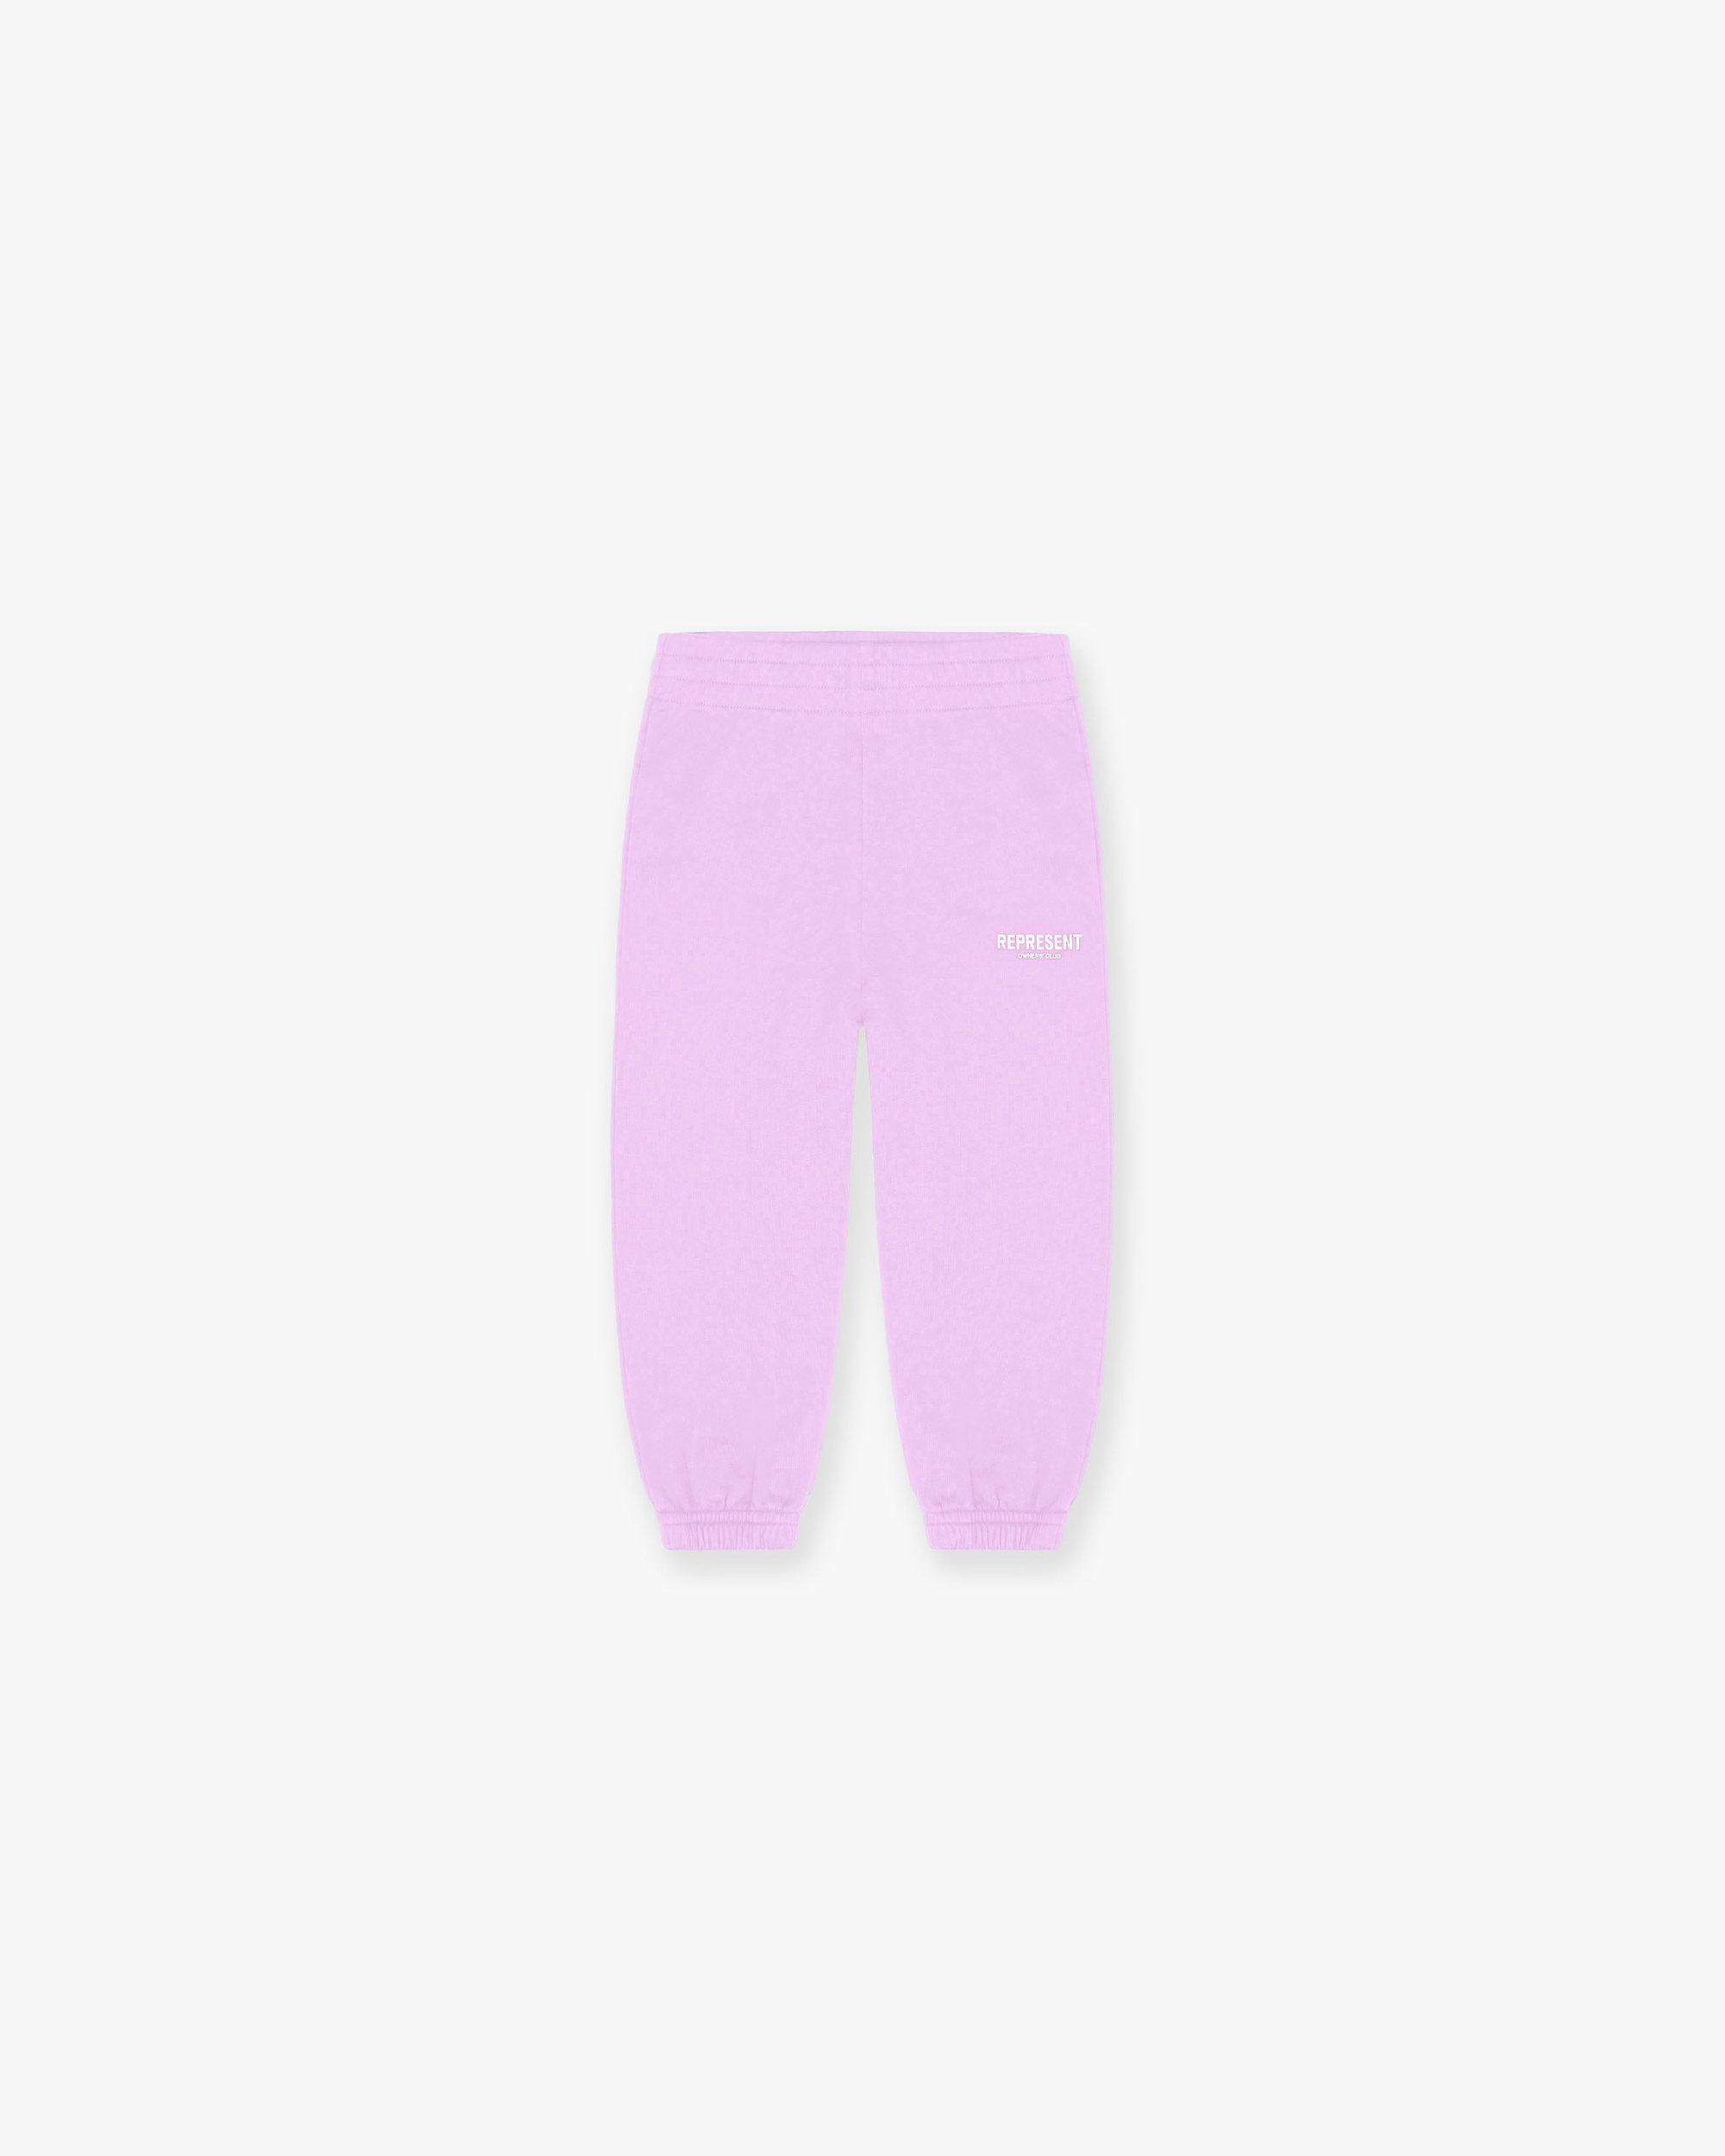 Represent Mini Owners Club Sweatpants | Lilac Pants Owners Club | Represent Clo